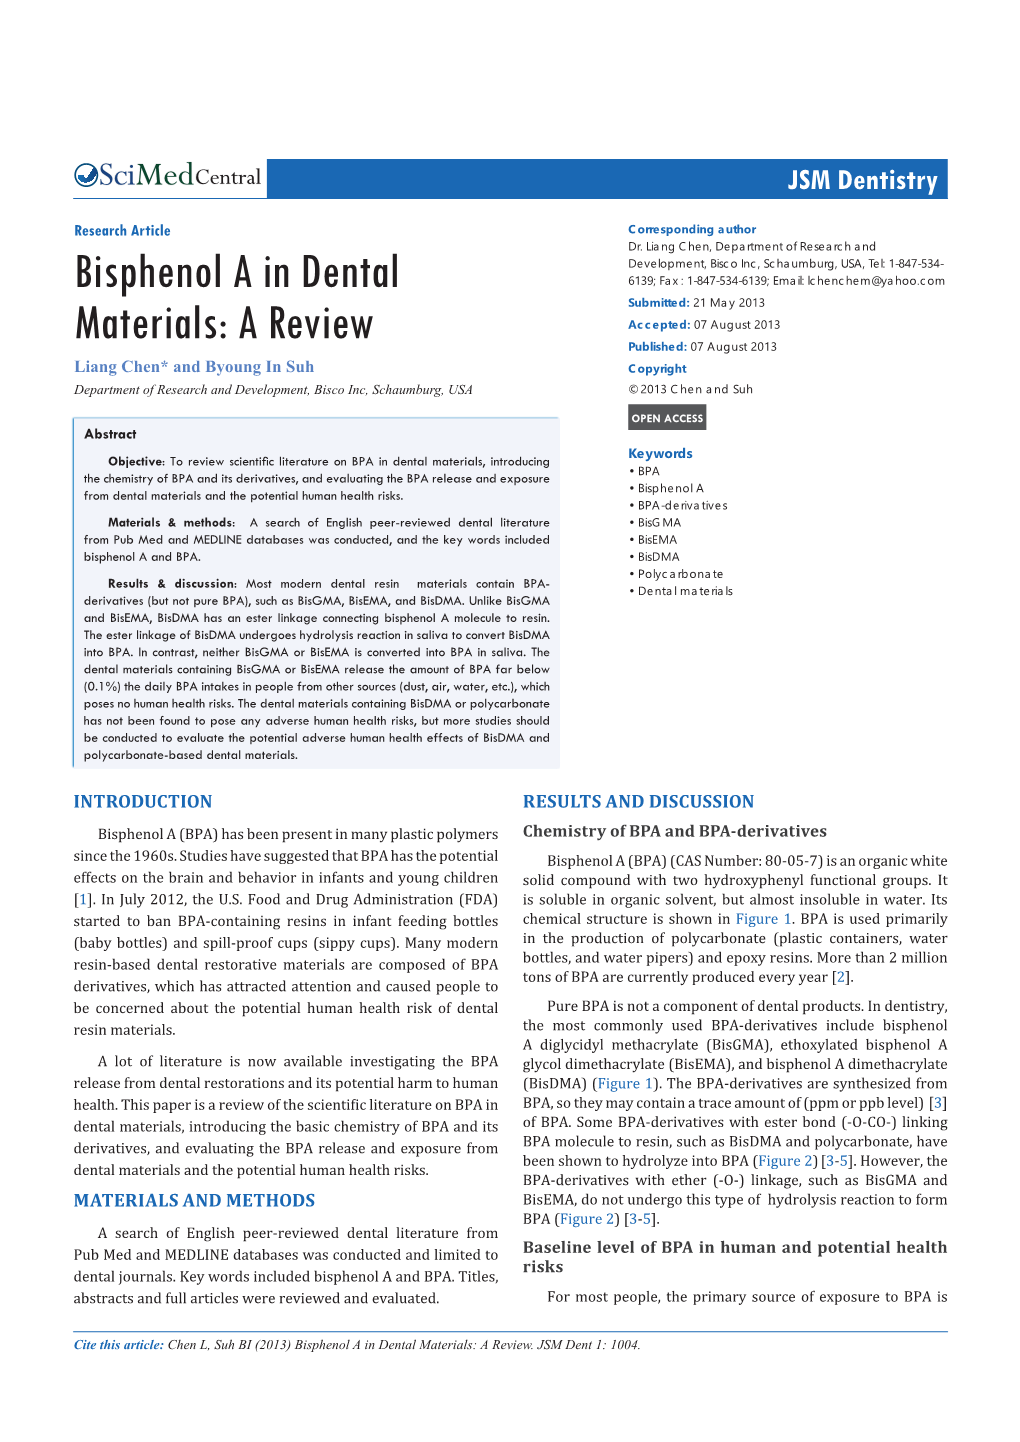 Bisphenol a in Dental Materials: a Review